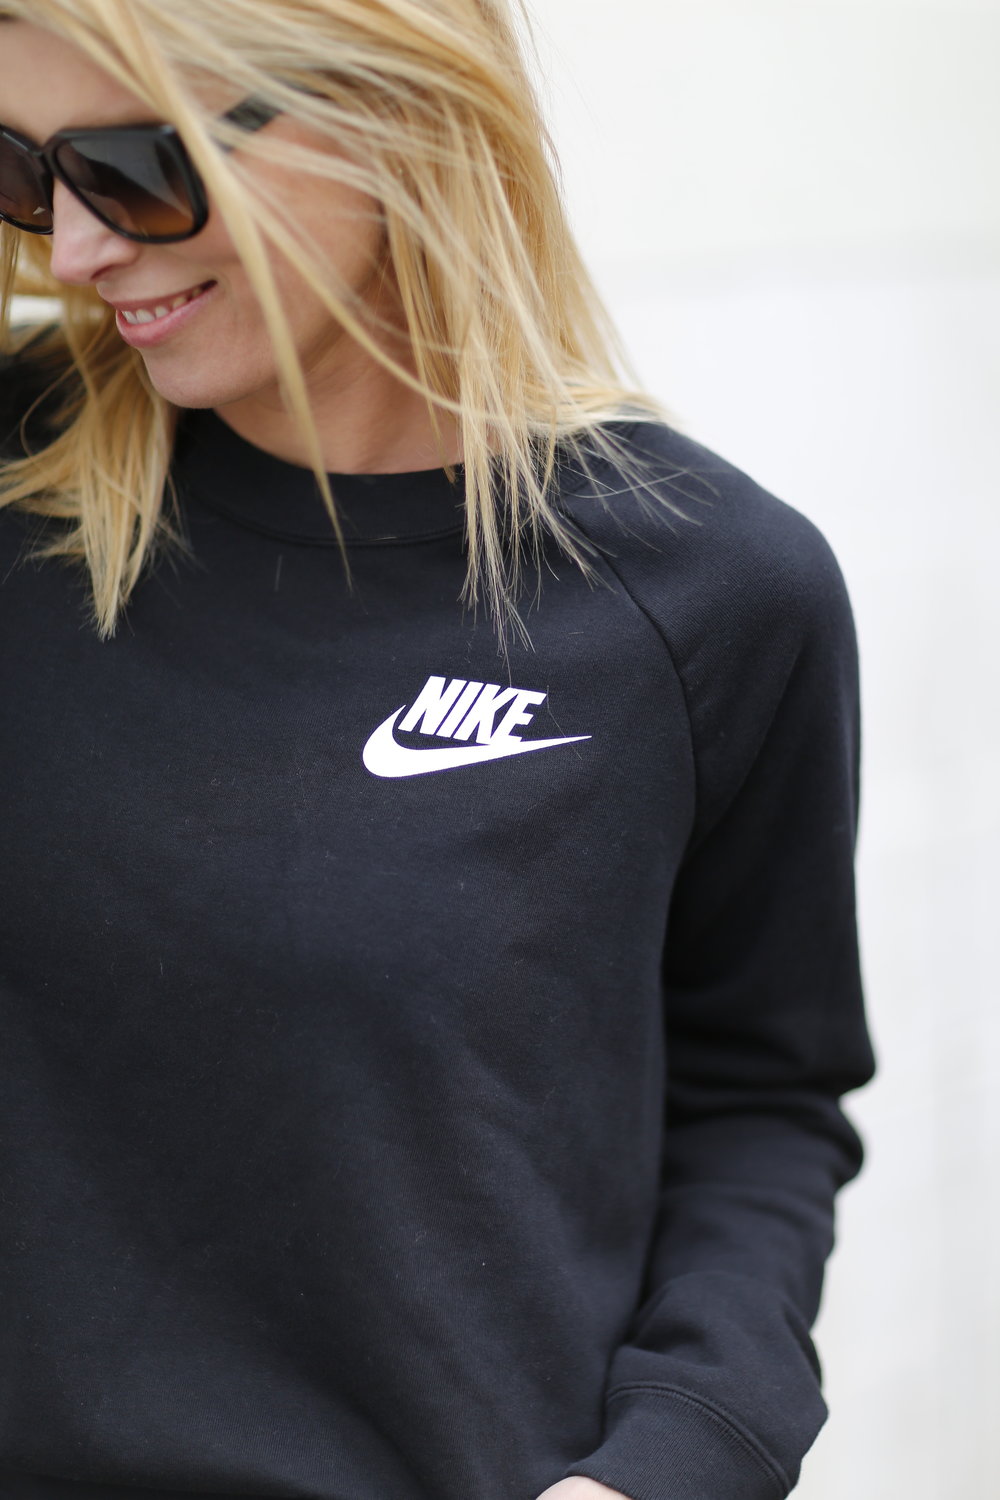  Black Nike Sweatshirt, the perfect gym sweatshirt 